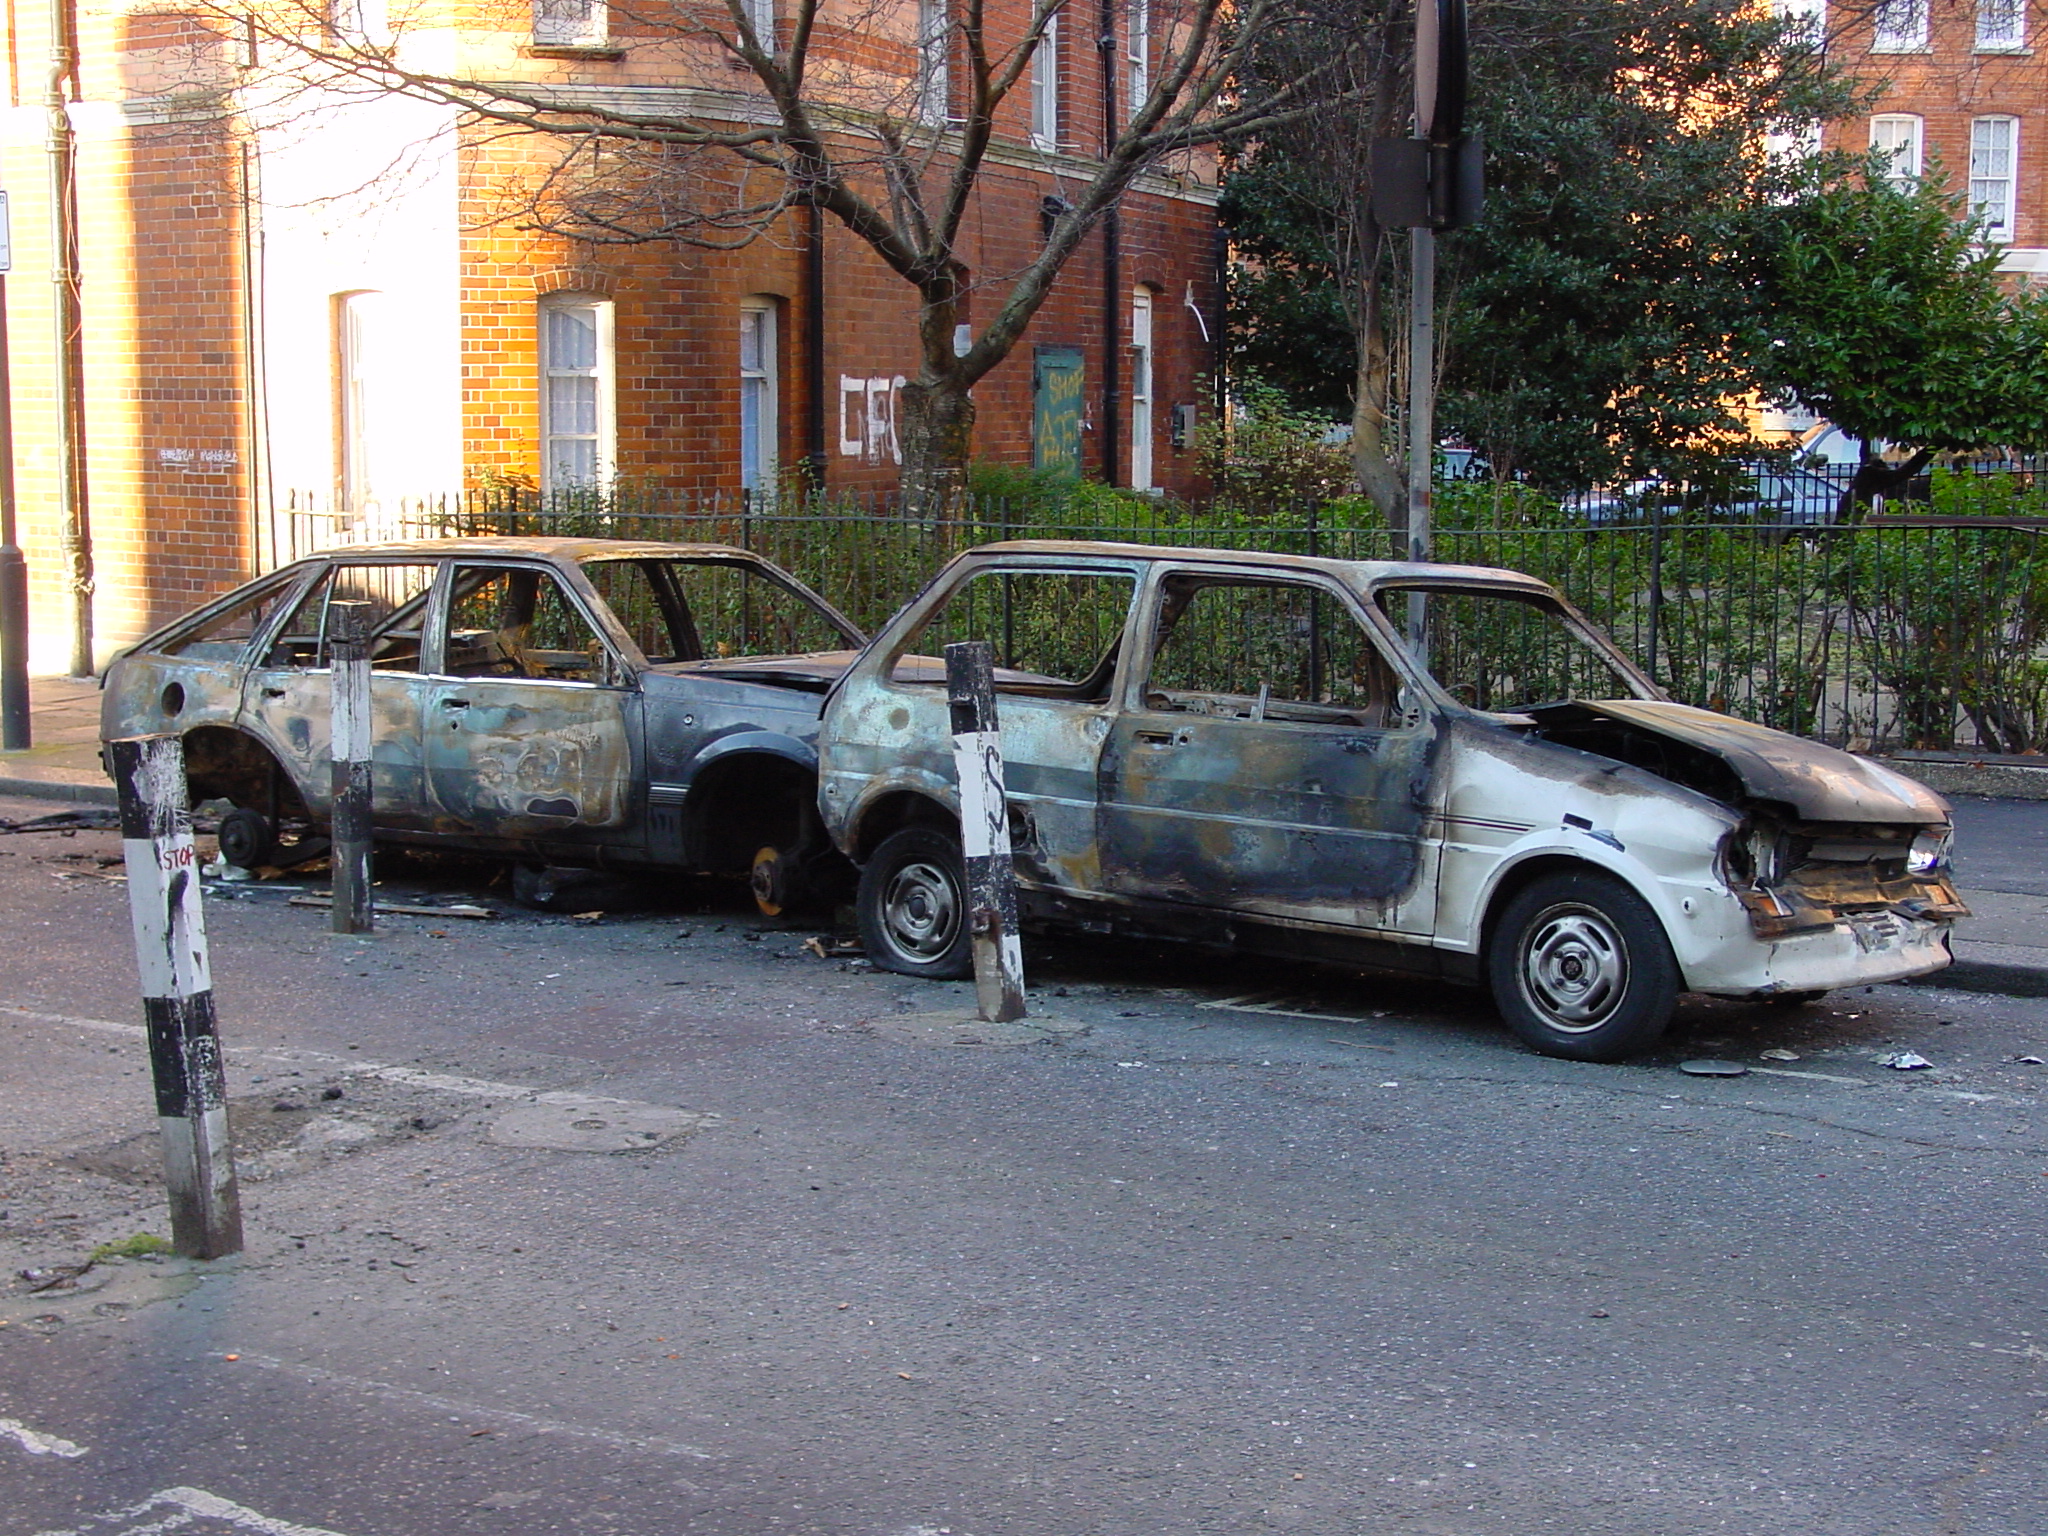 Burnt out cars, Rochelle Street, 1 Jan 2002